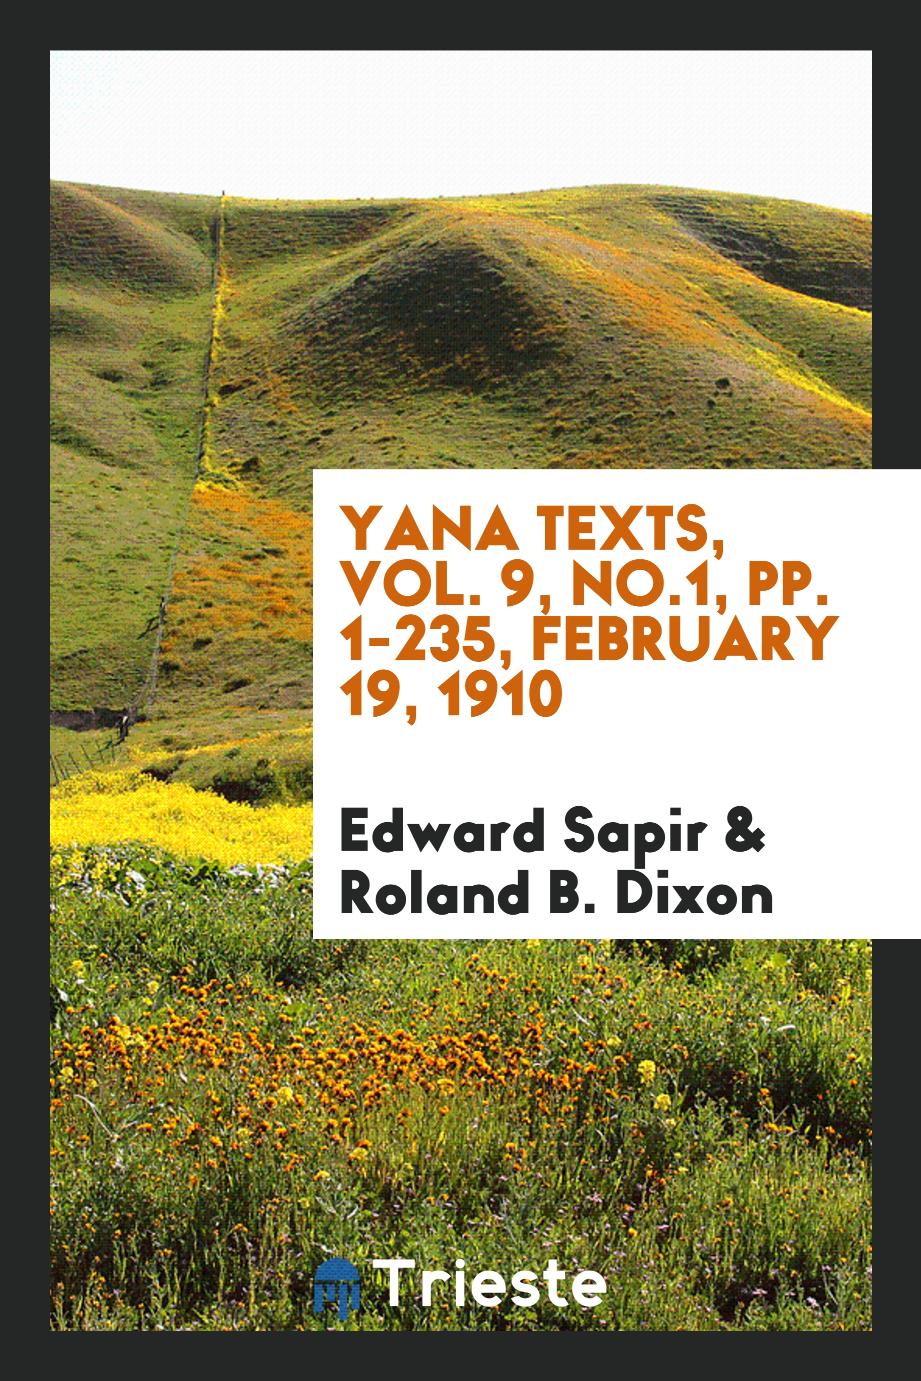 Yana texts, Vol. 9, No.1, pp. 1-235, February 19, 1910